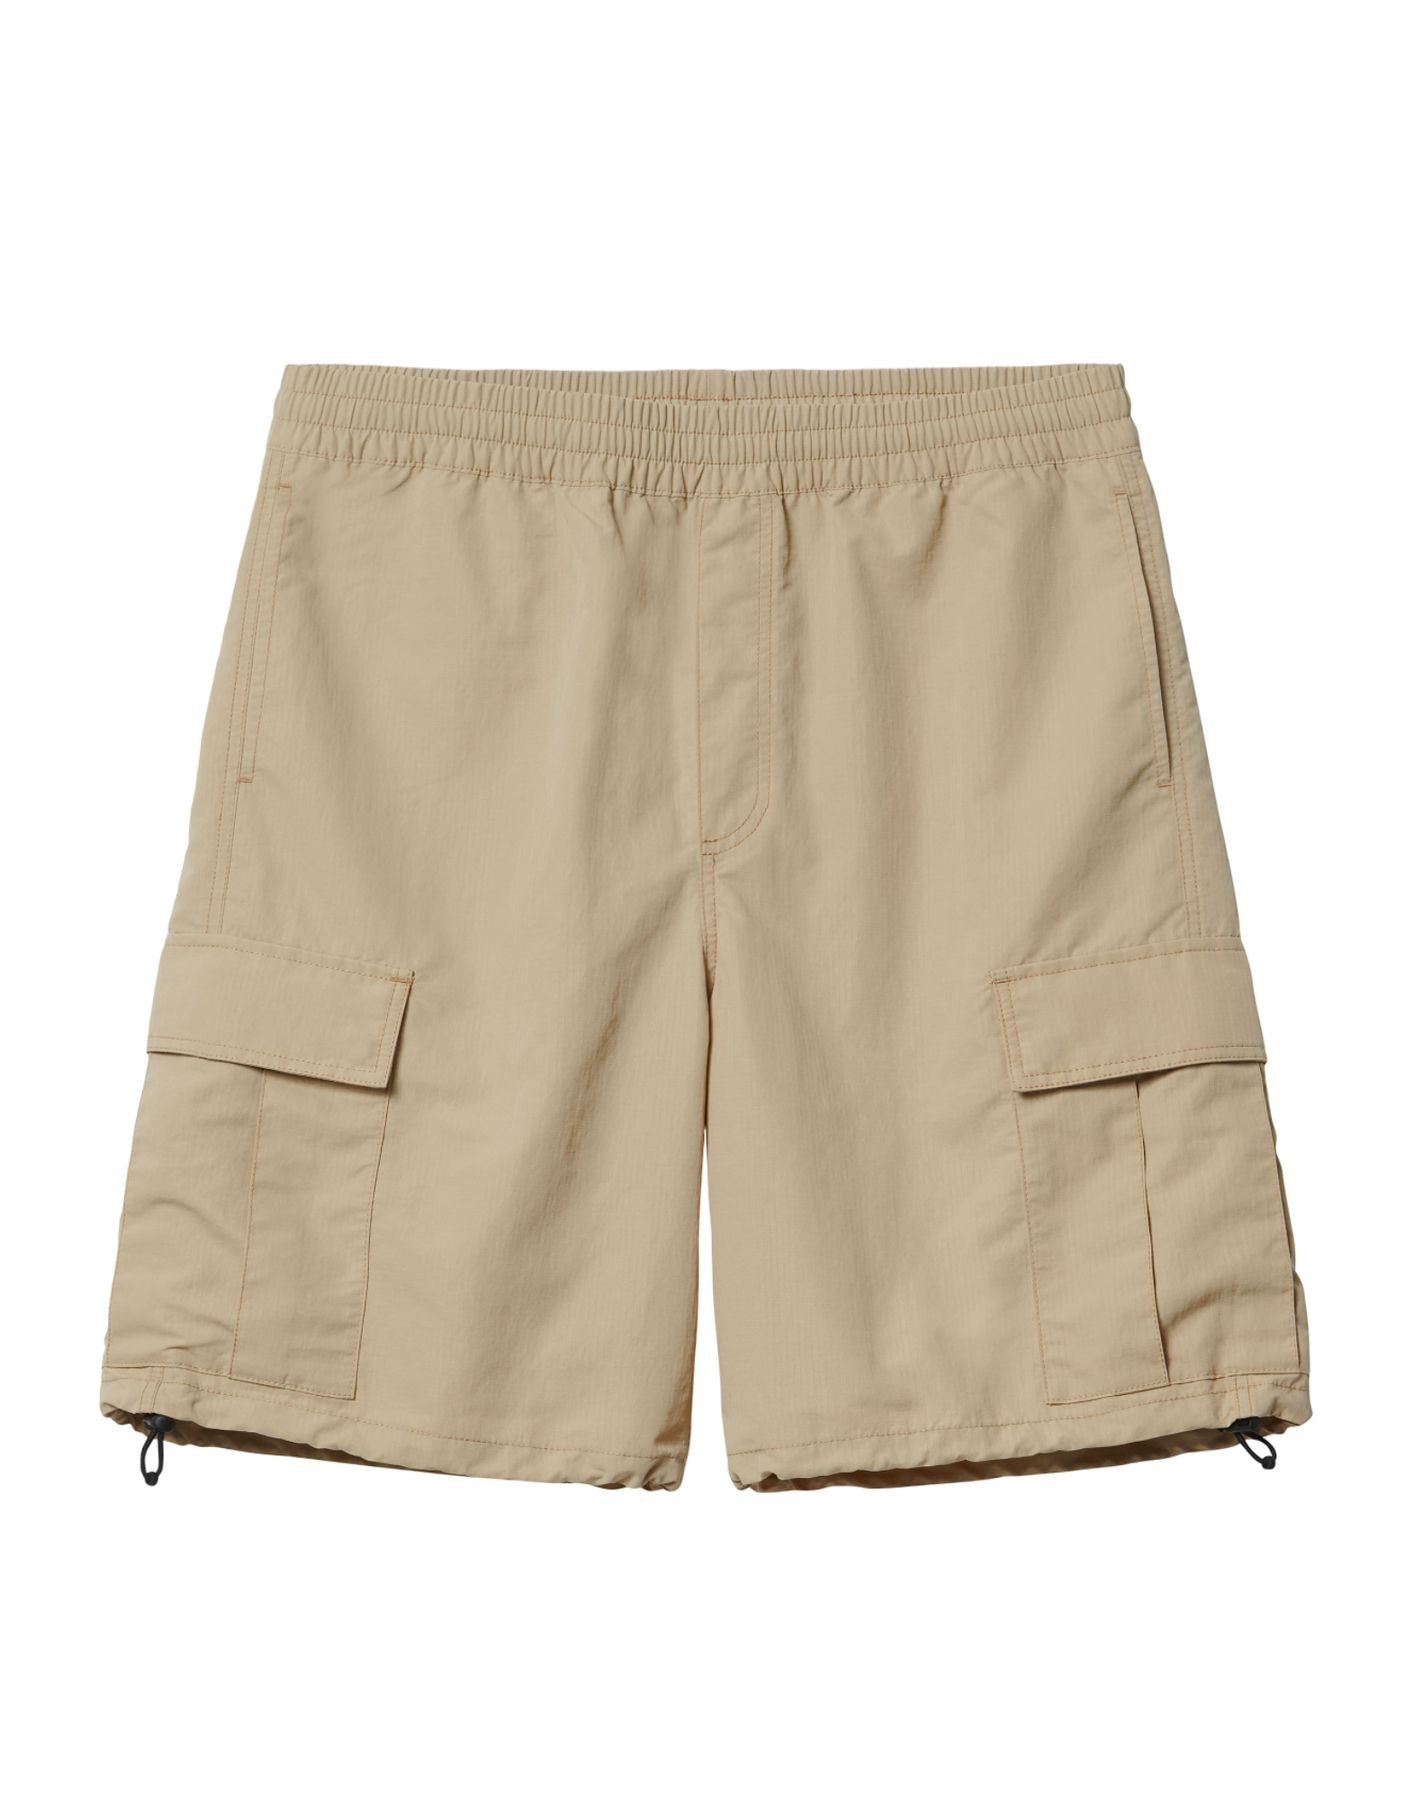 Shorts pour homme i033025 g1.xx beige CARHARTT WIP